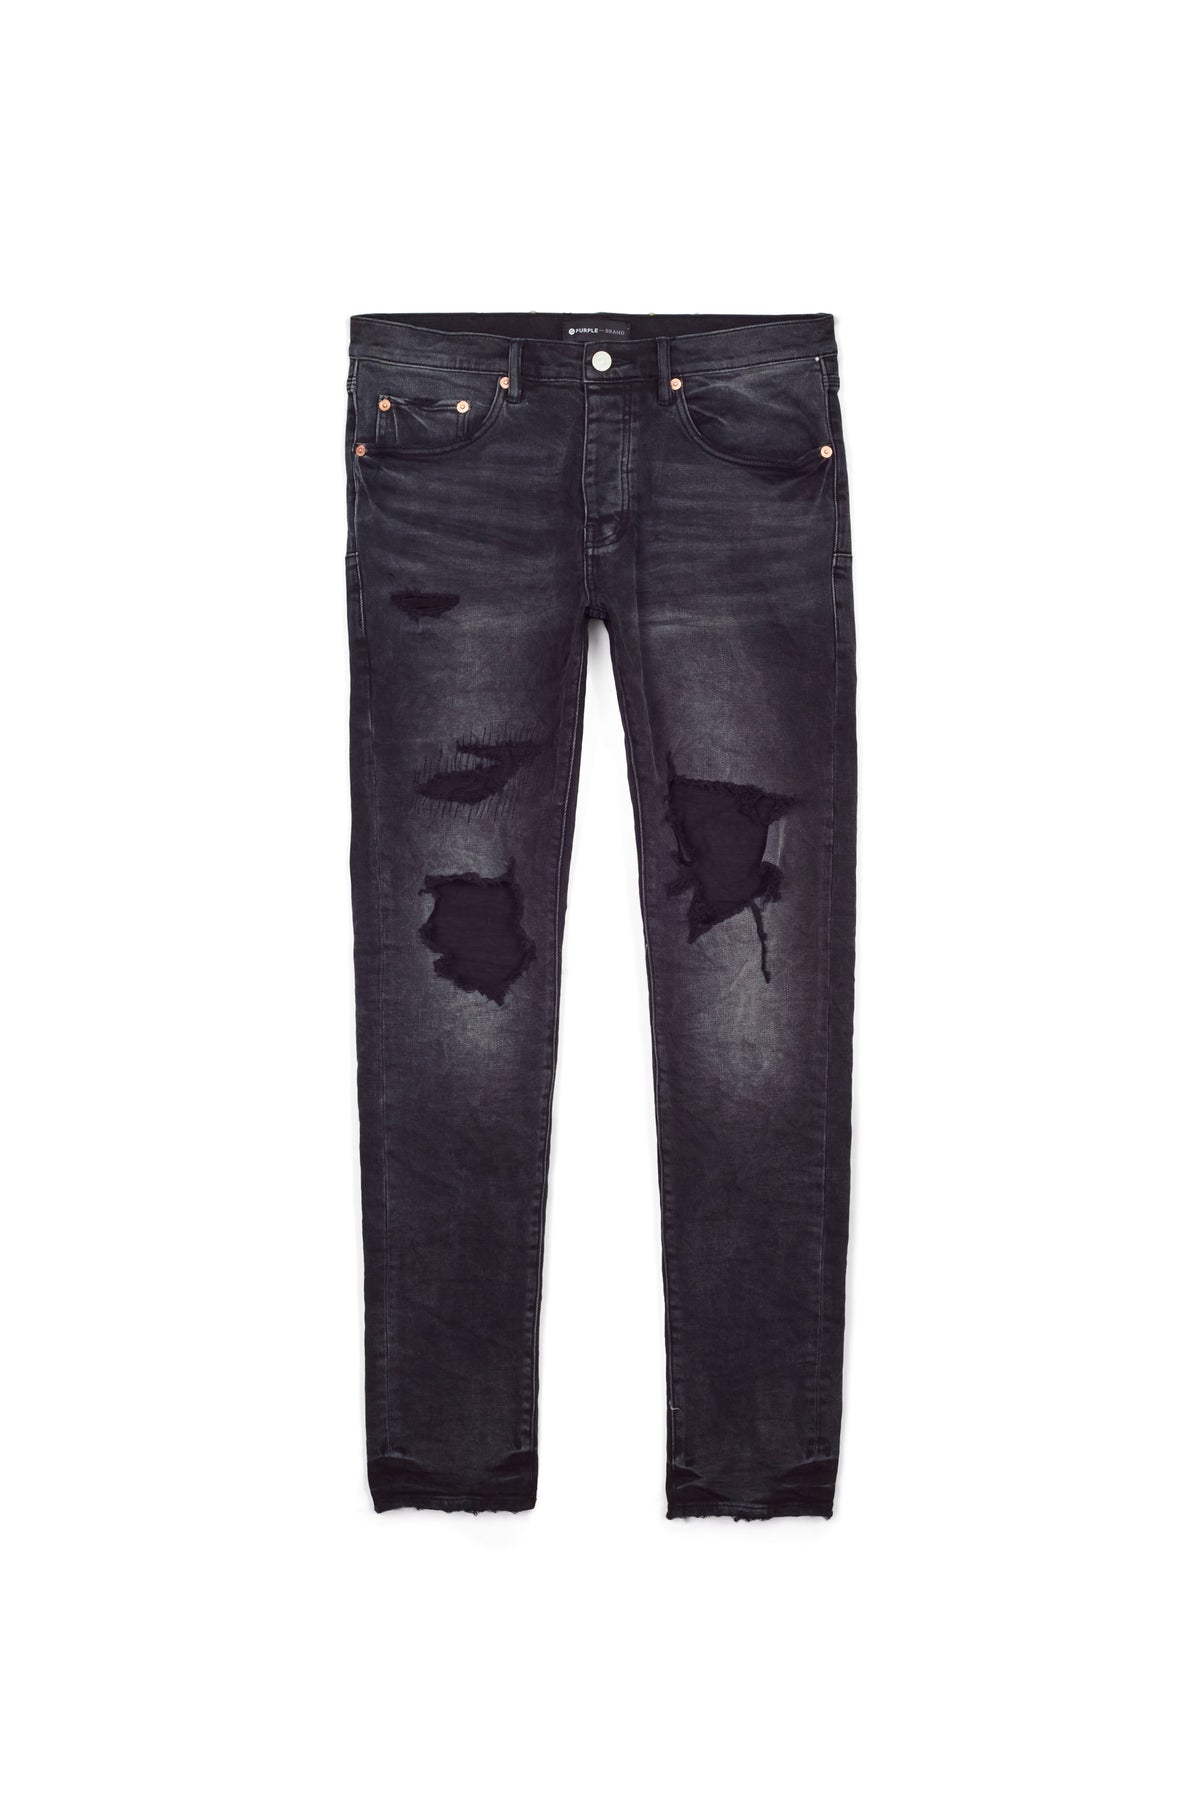 Purple Brand Worn Black Distress Jeans - BLACK